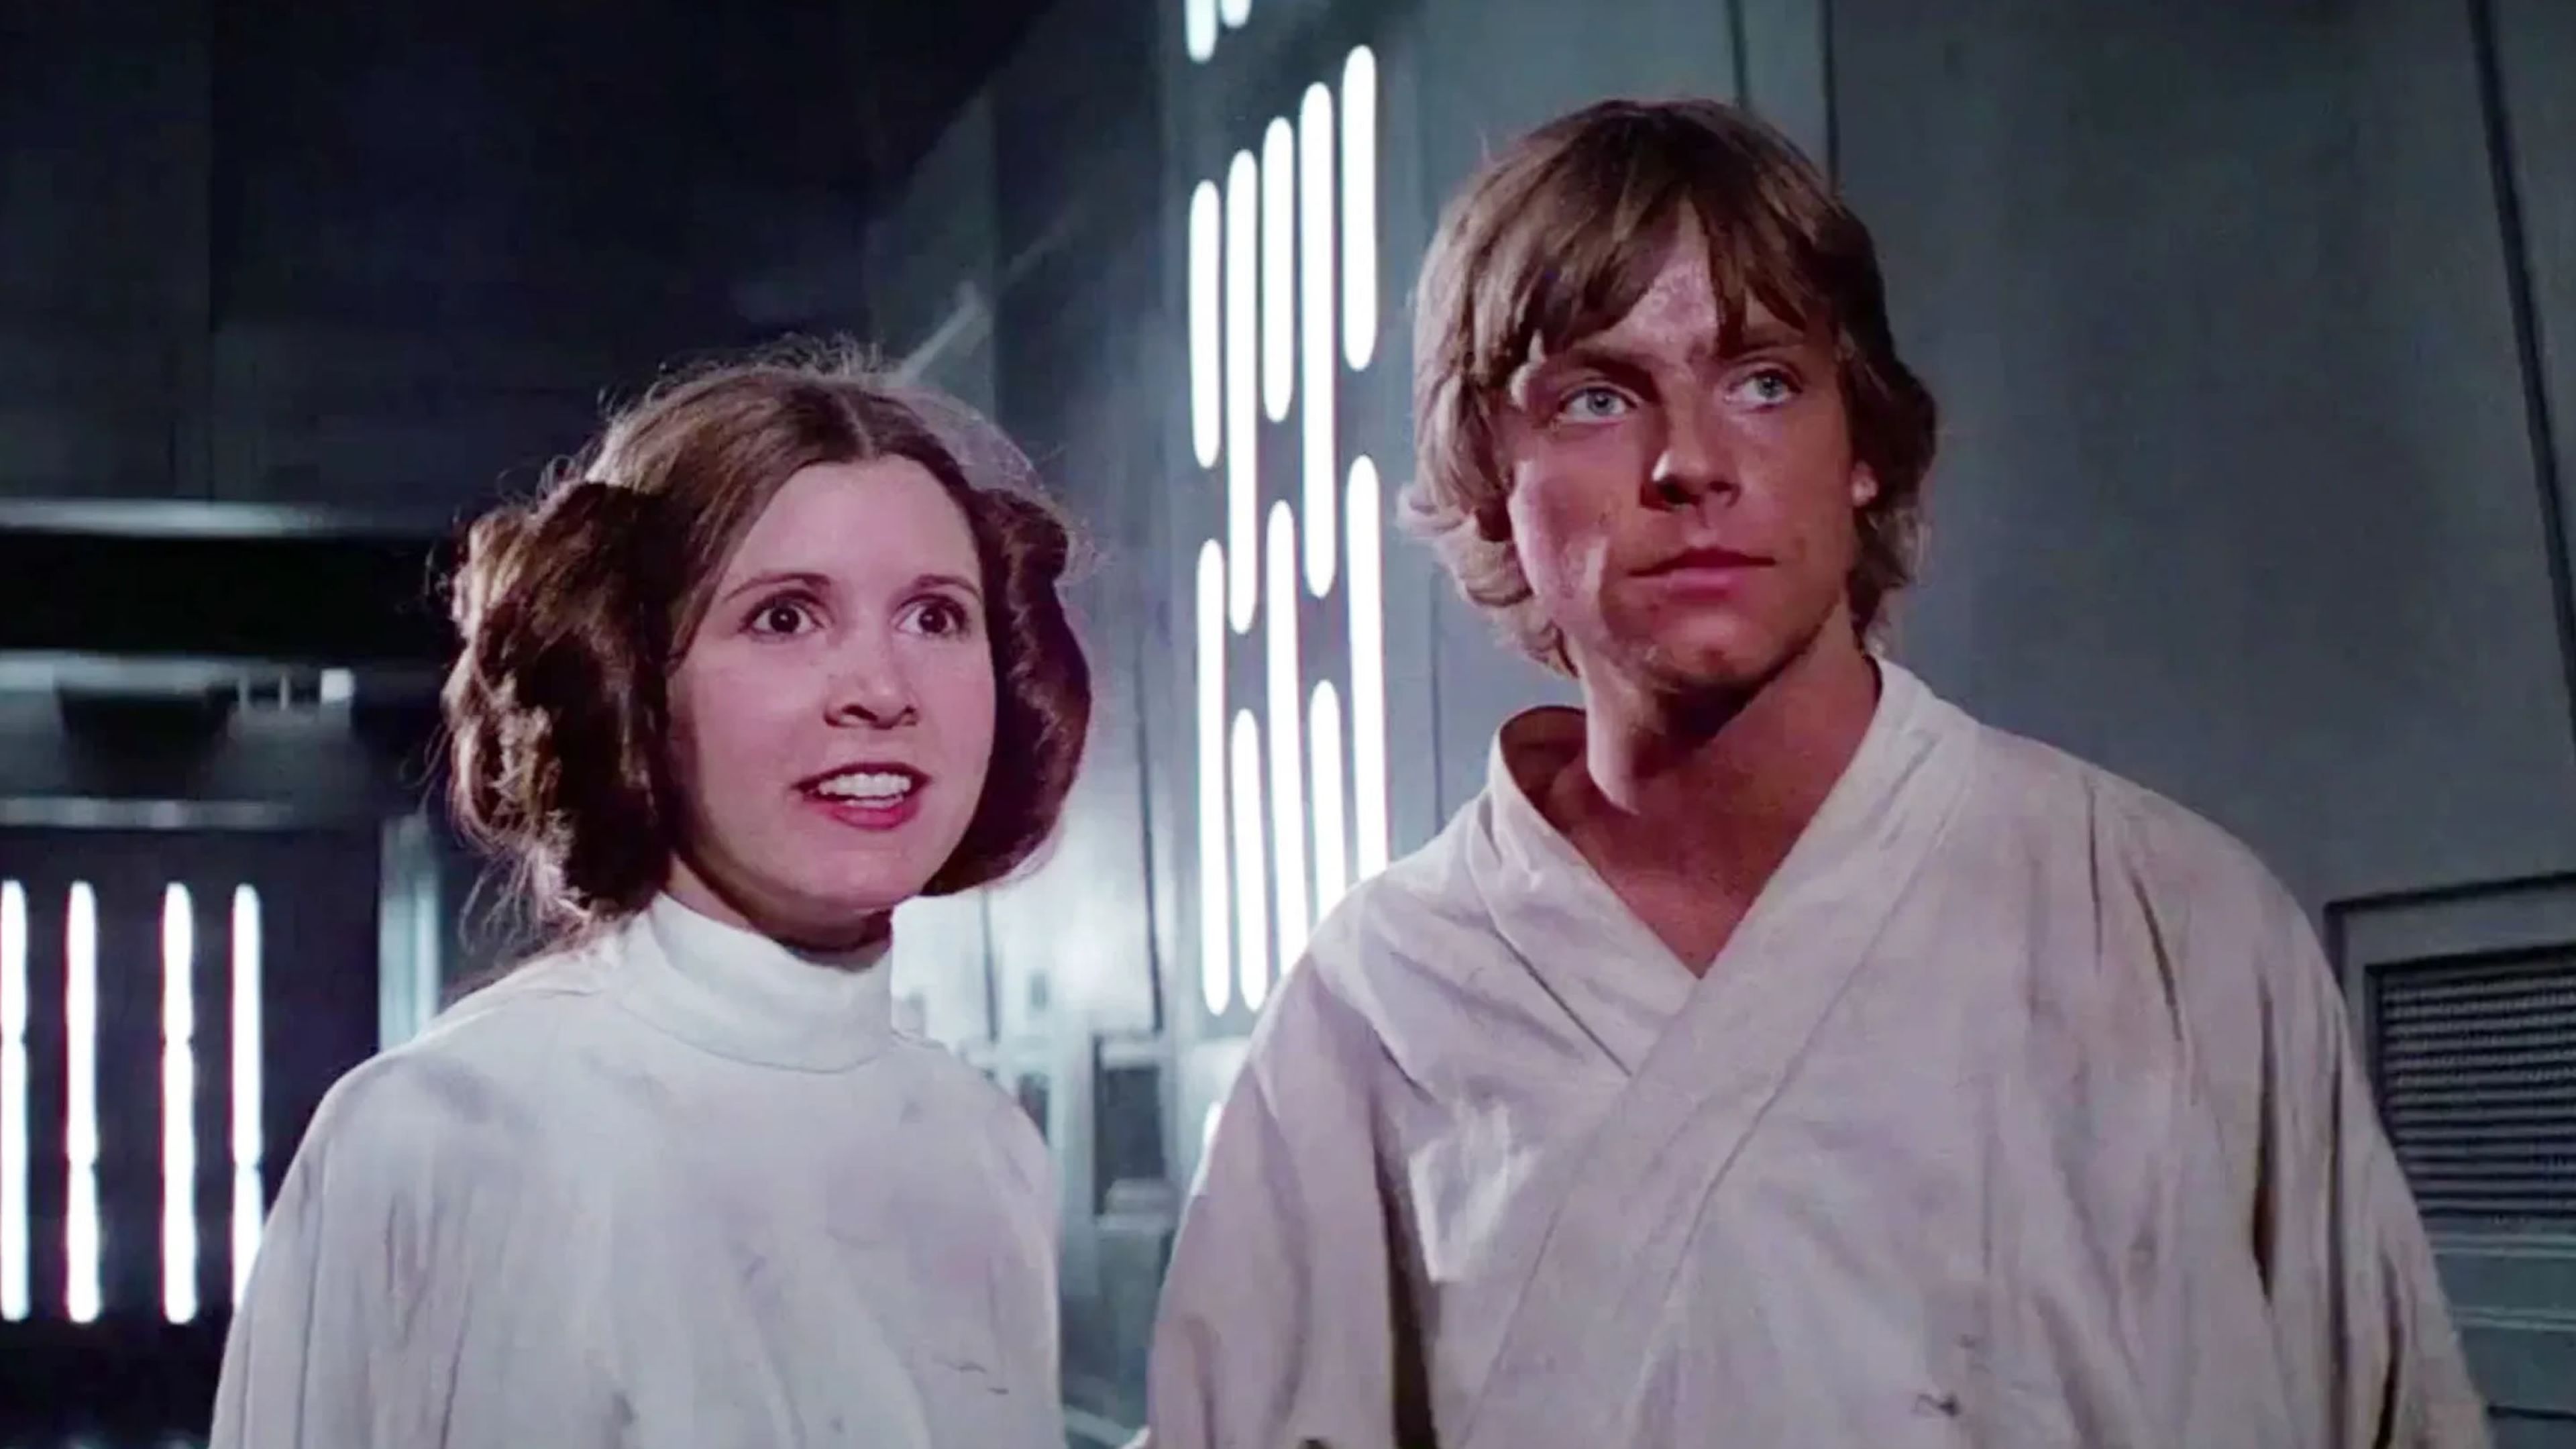 Star Wars: Episodio IV - Una nueva esperanza (1977) - Princesa Leia Organa (Carrie Fisher) y Luke Skywalker (Mark Hamill)